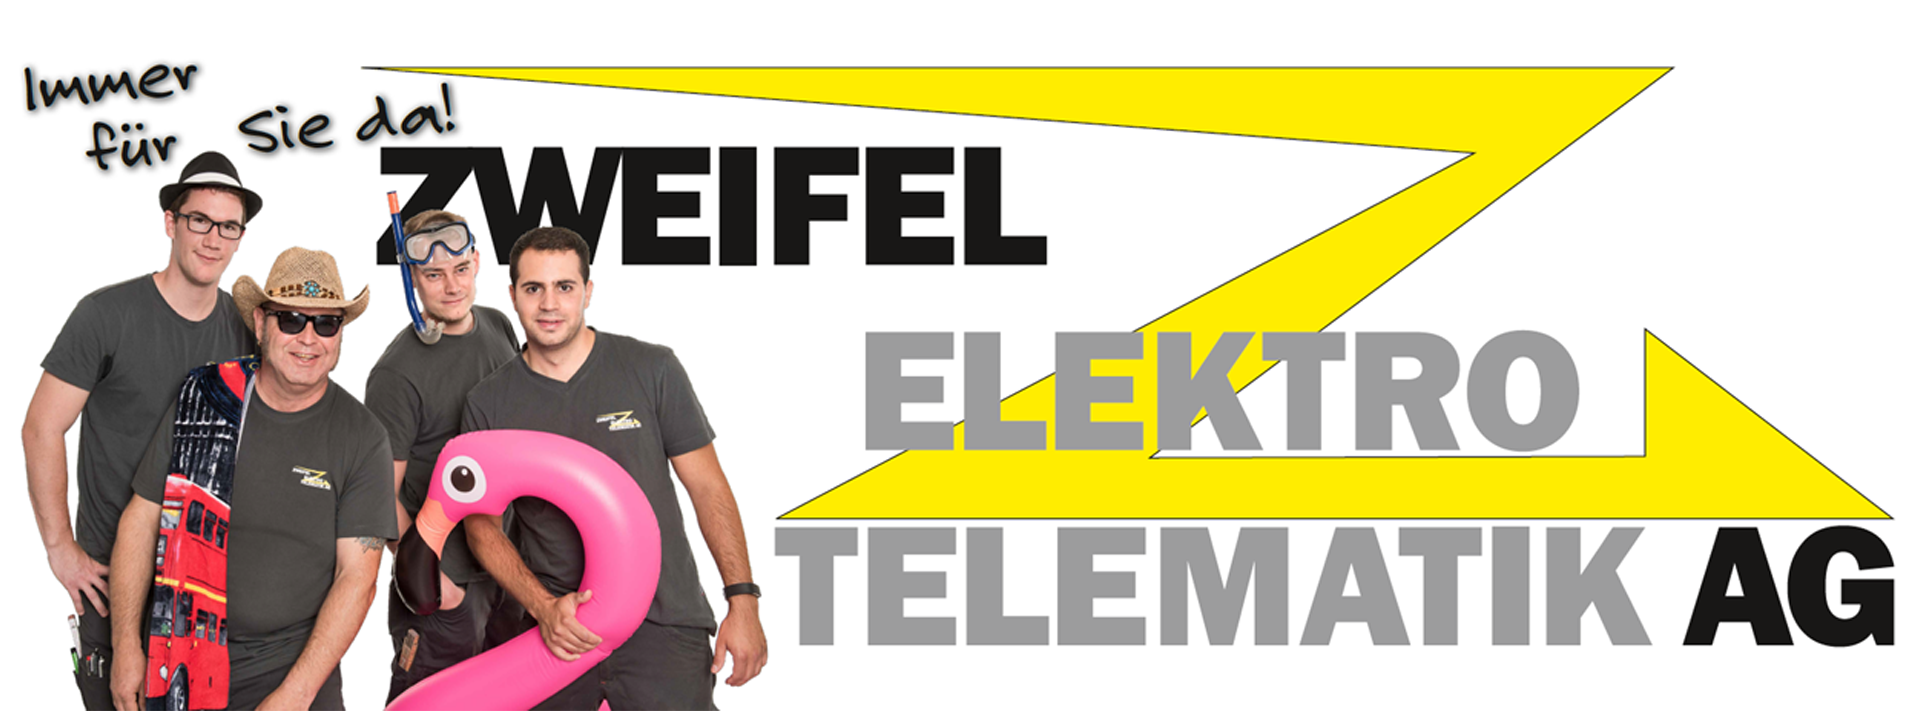 Zweifel Elektro Telematik AG in Bildern